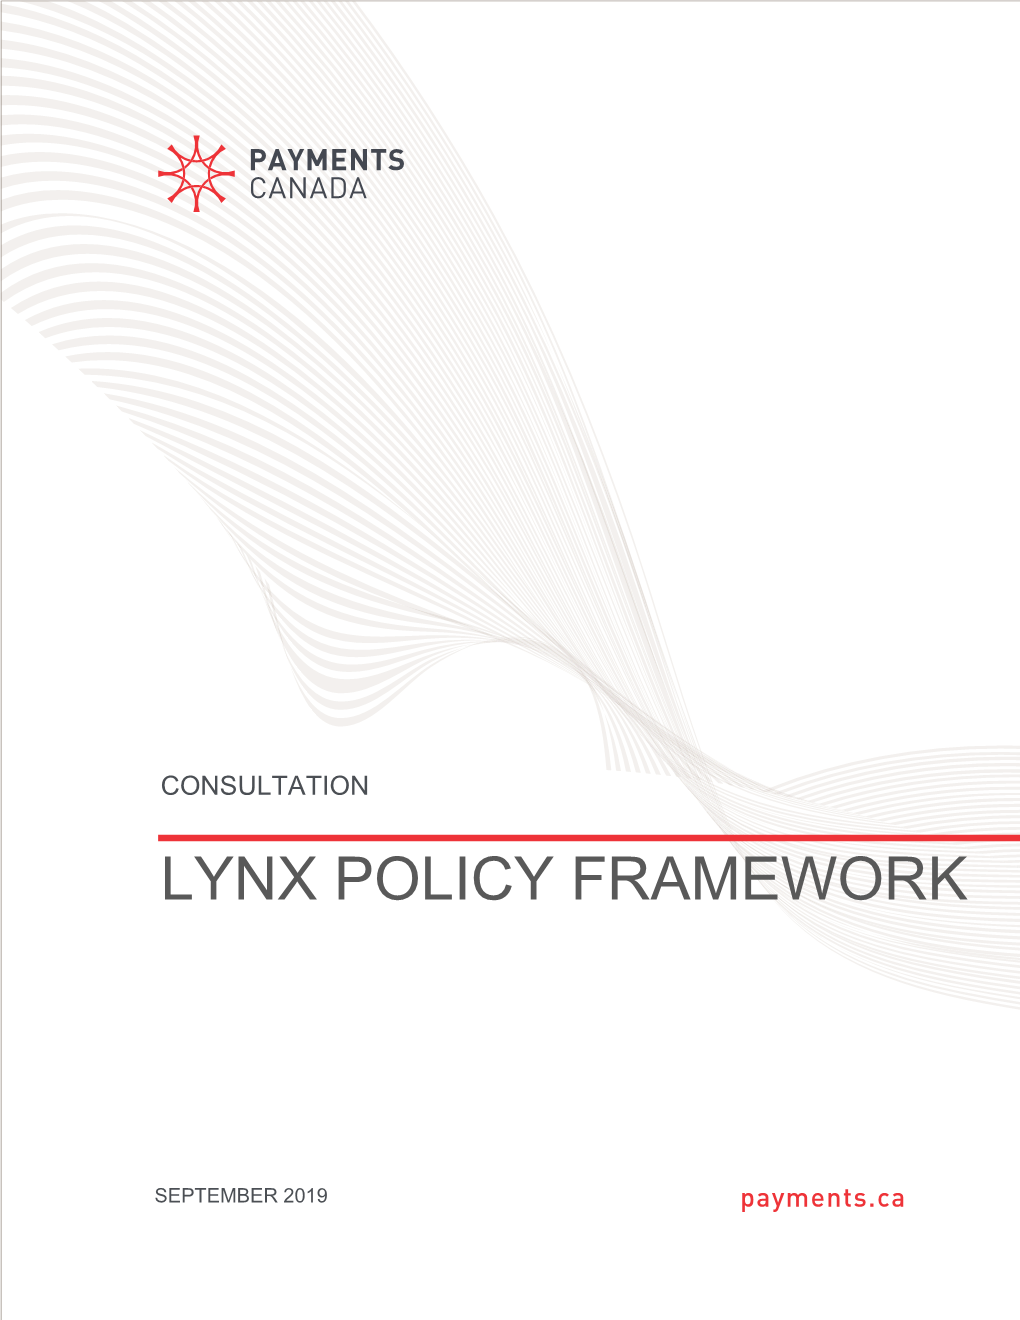 Lynx Policy Framework Consultation Paper